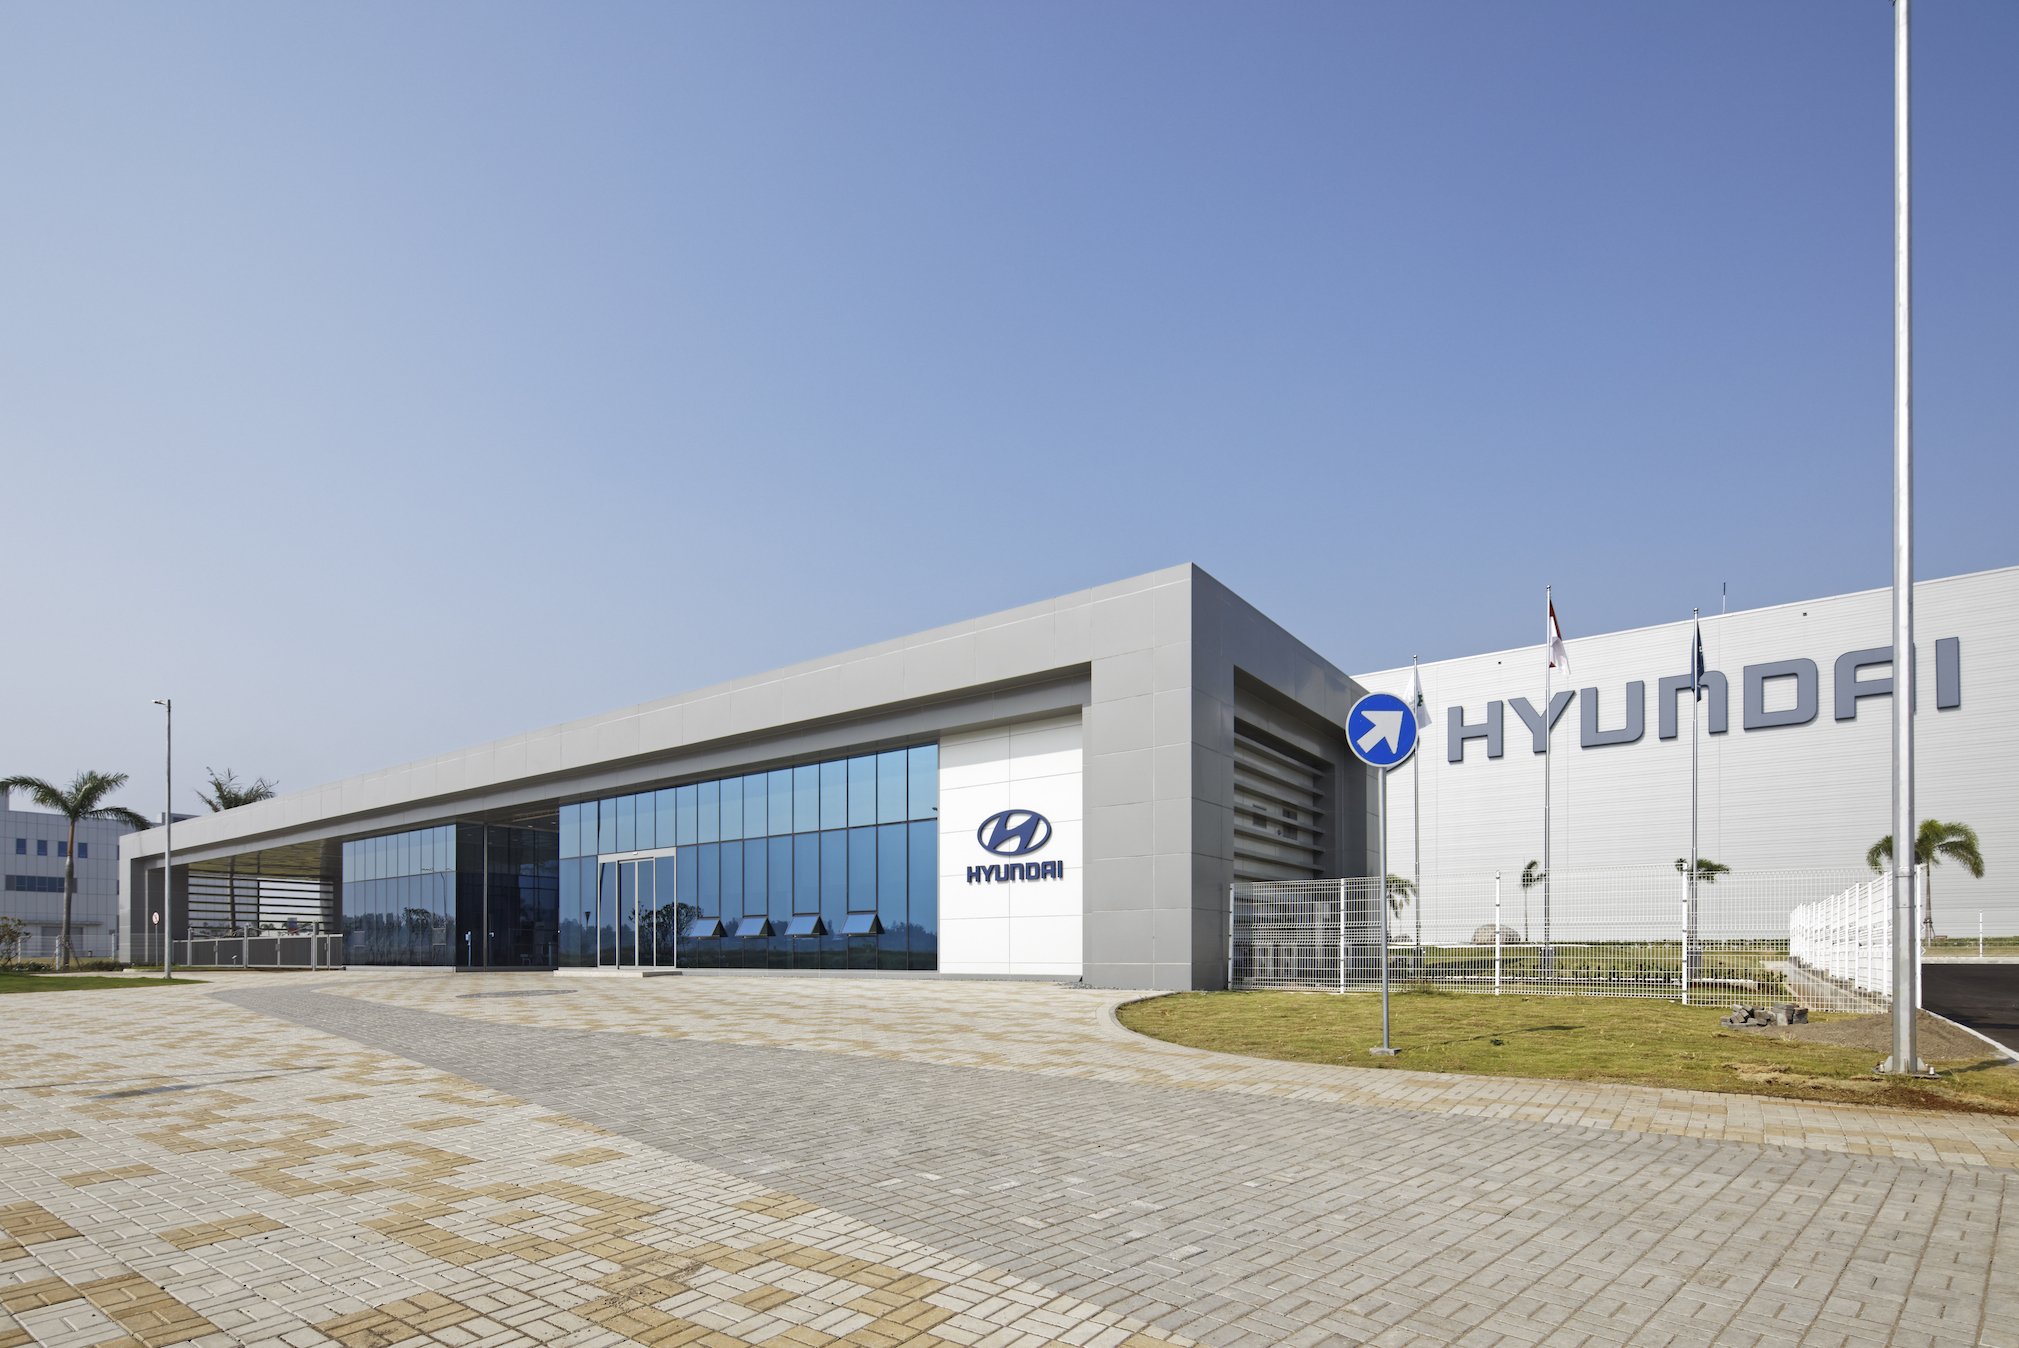 059-Hyundai Factory (TAKENAKA) -29.08__05.09.2021-.jpg